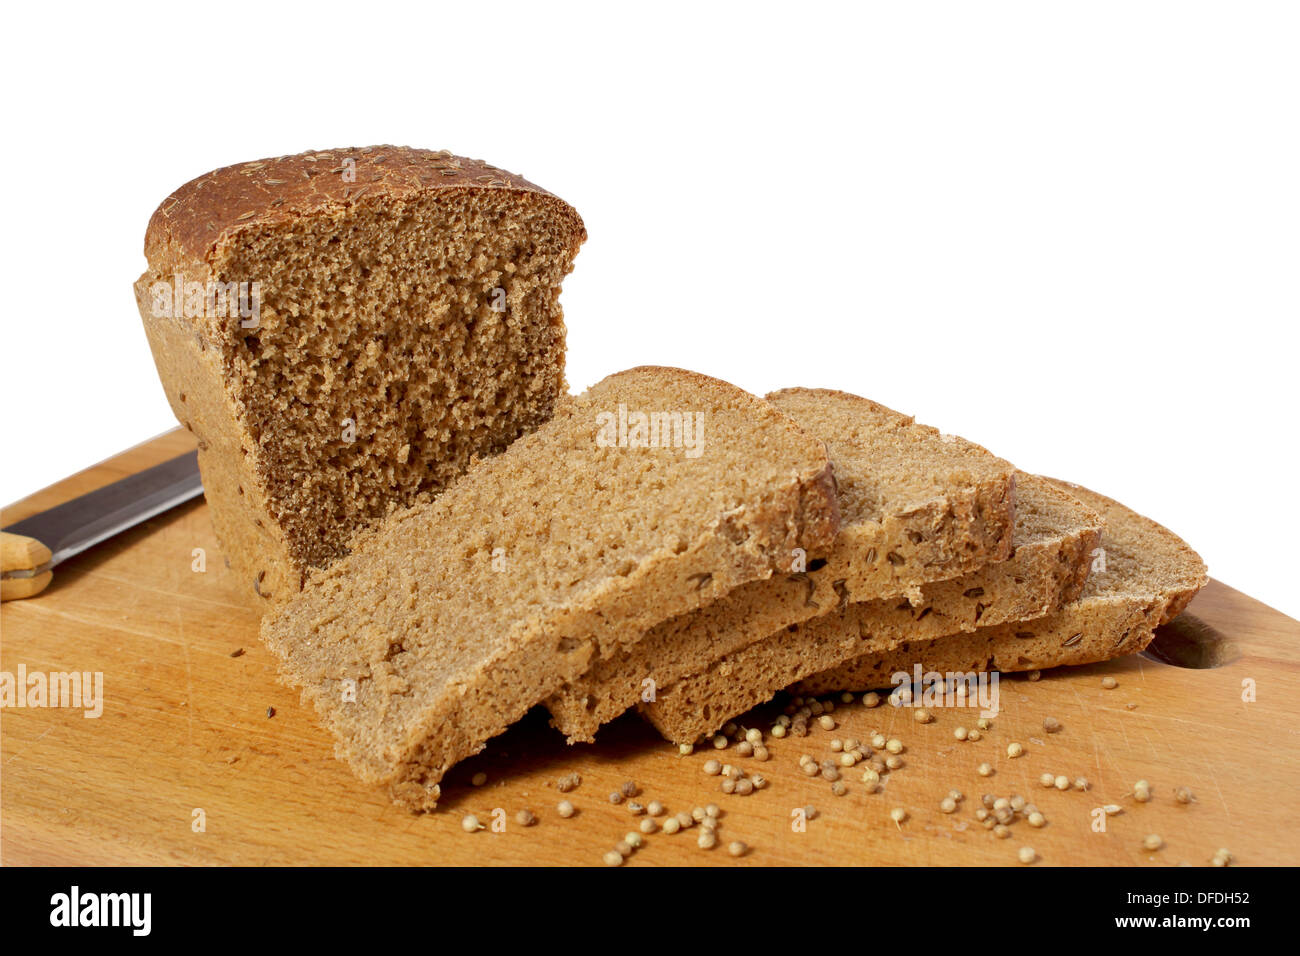 Knife, chopped rye bread on a cutting board wooden. Ржаной хлеб нарезаный, нож на разделочной деревяной доске. Stock Photo